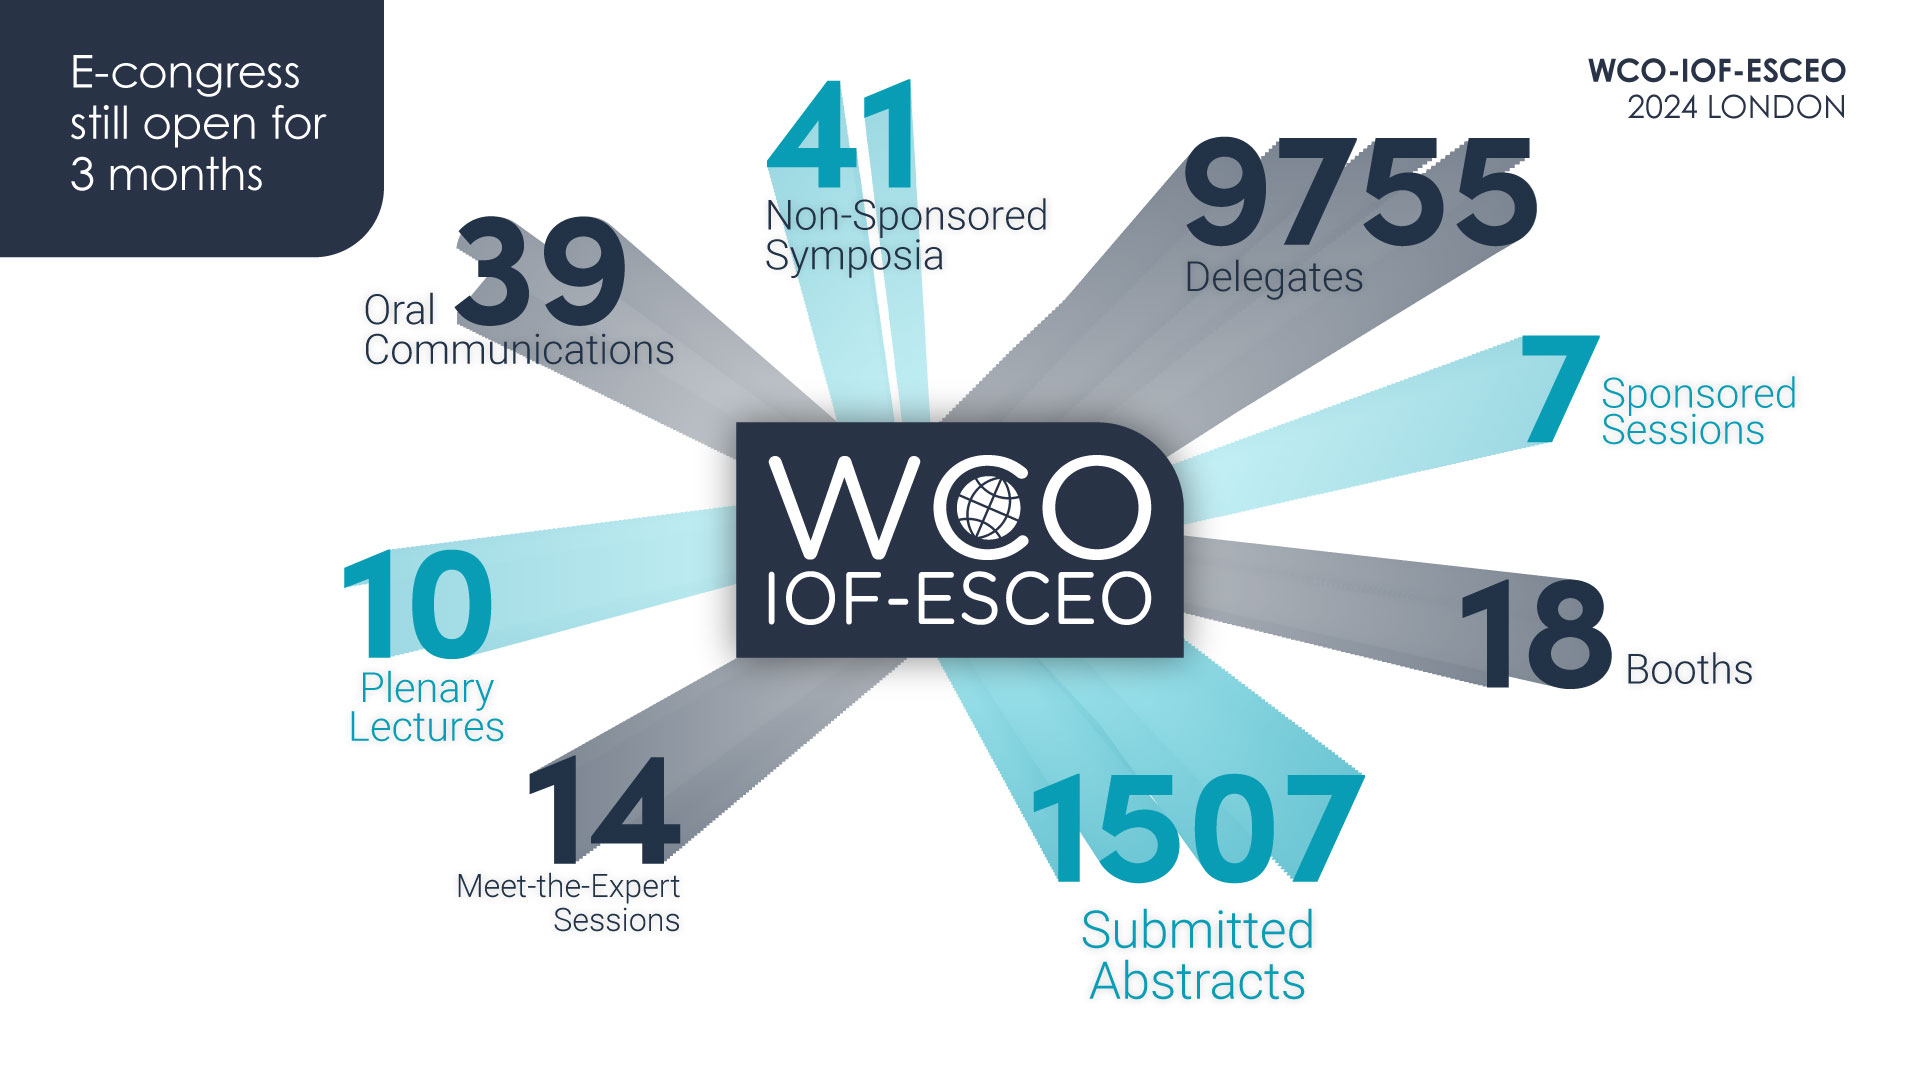 WCO-IOF-ESCEO 2022 SUCCESS 